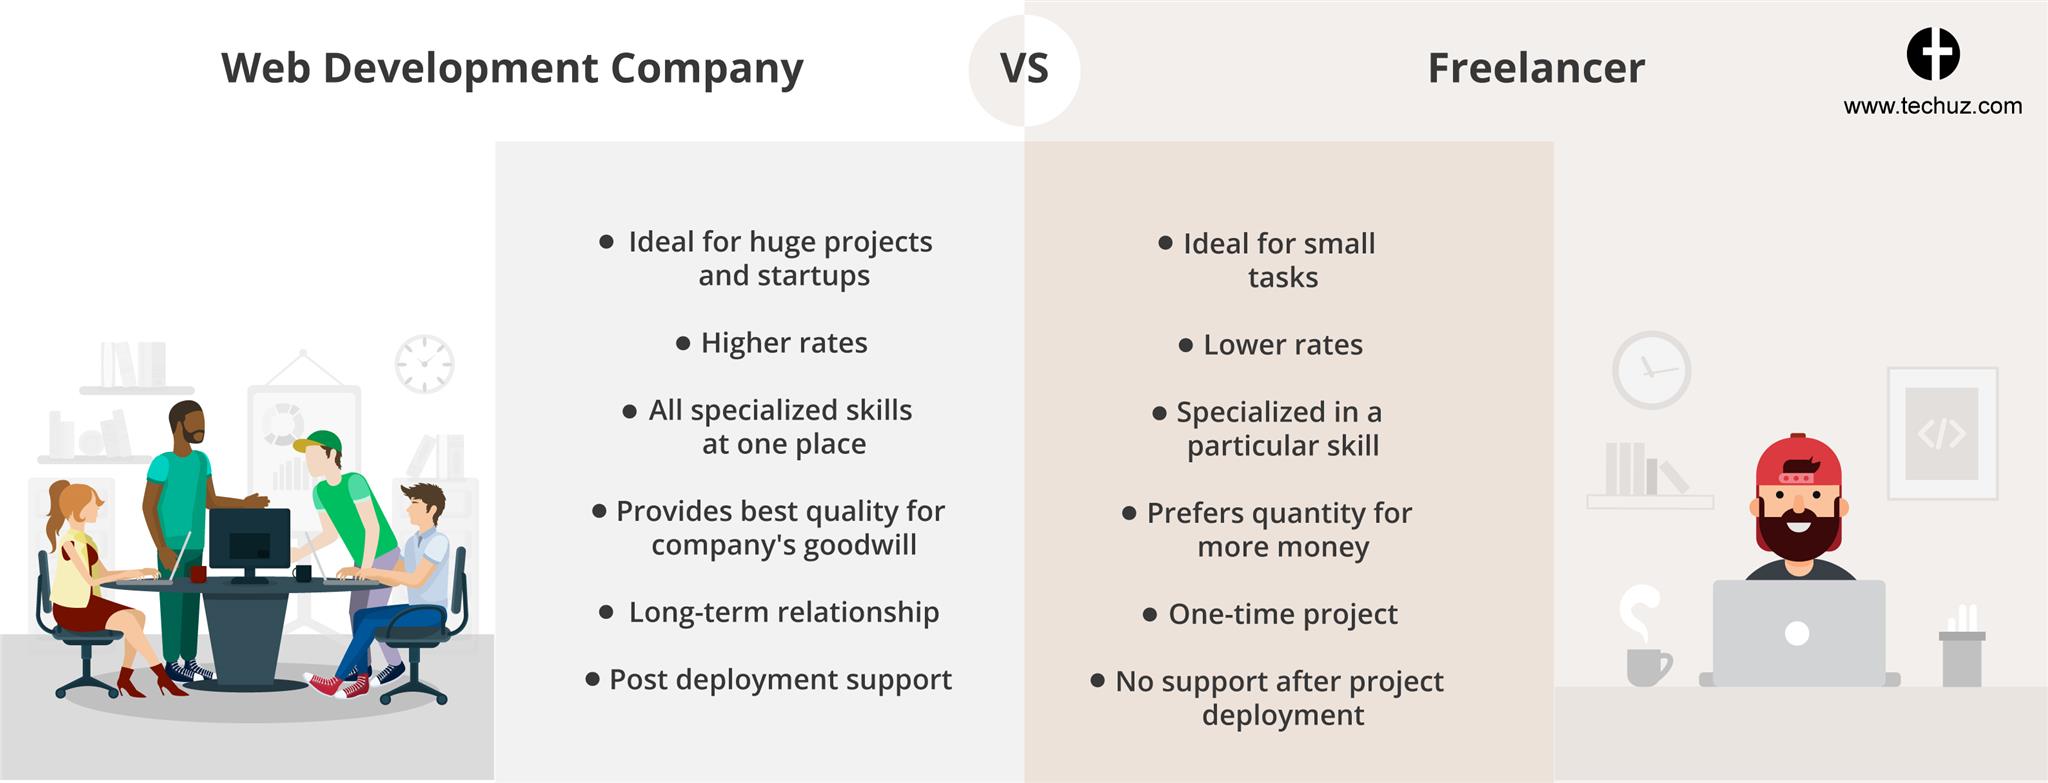 Web development company vs Freelancer